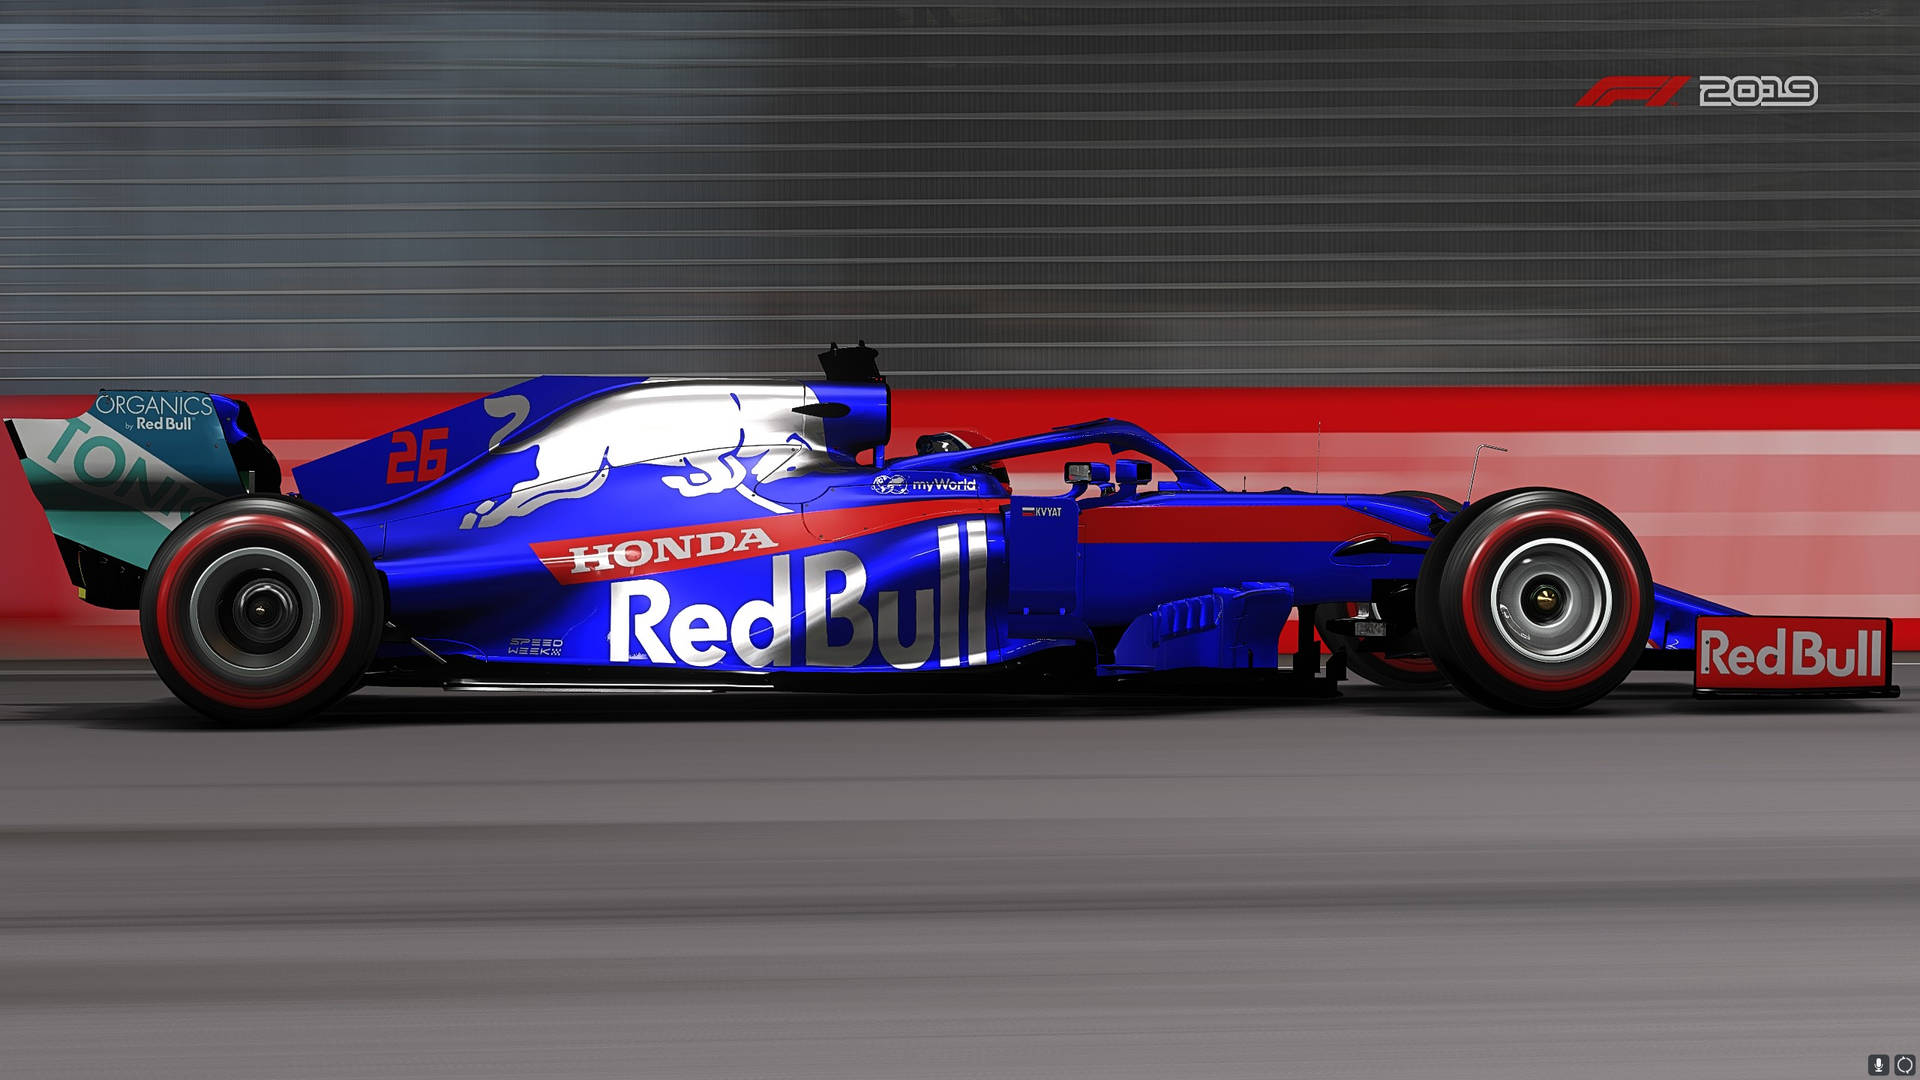 Kvyat's #26 Car In F1 2019 Background